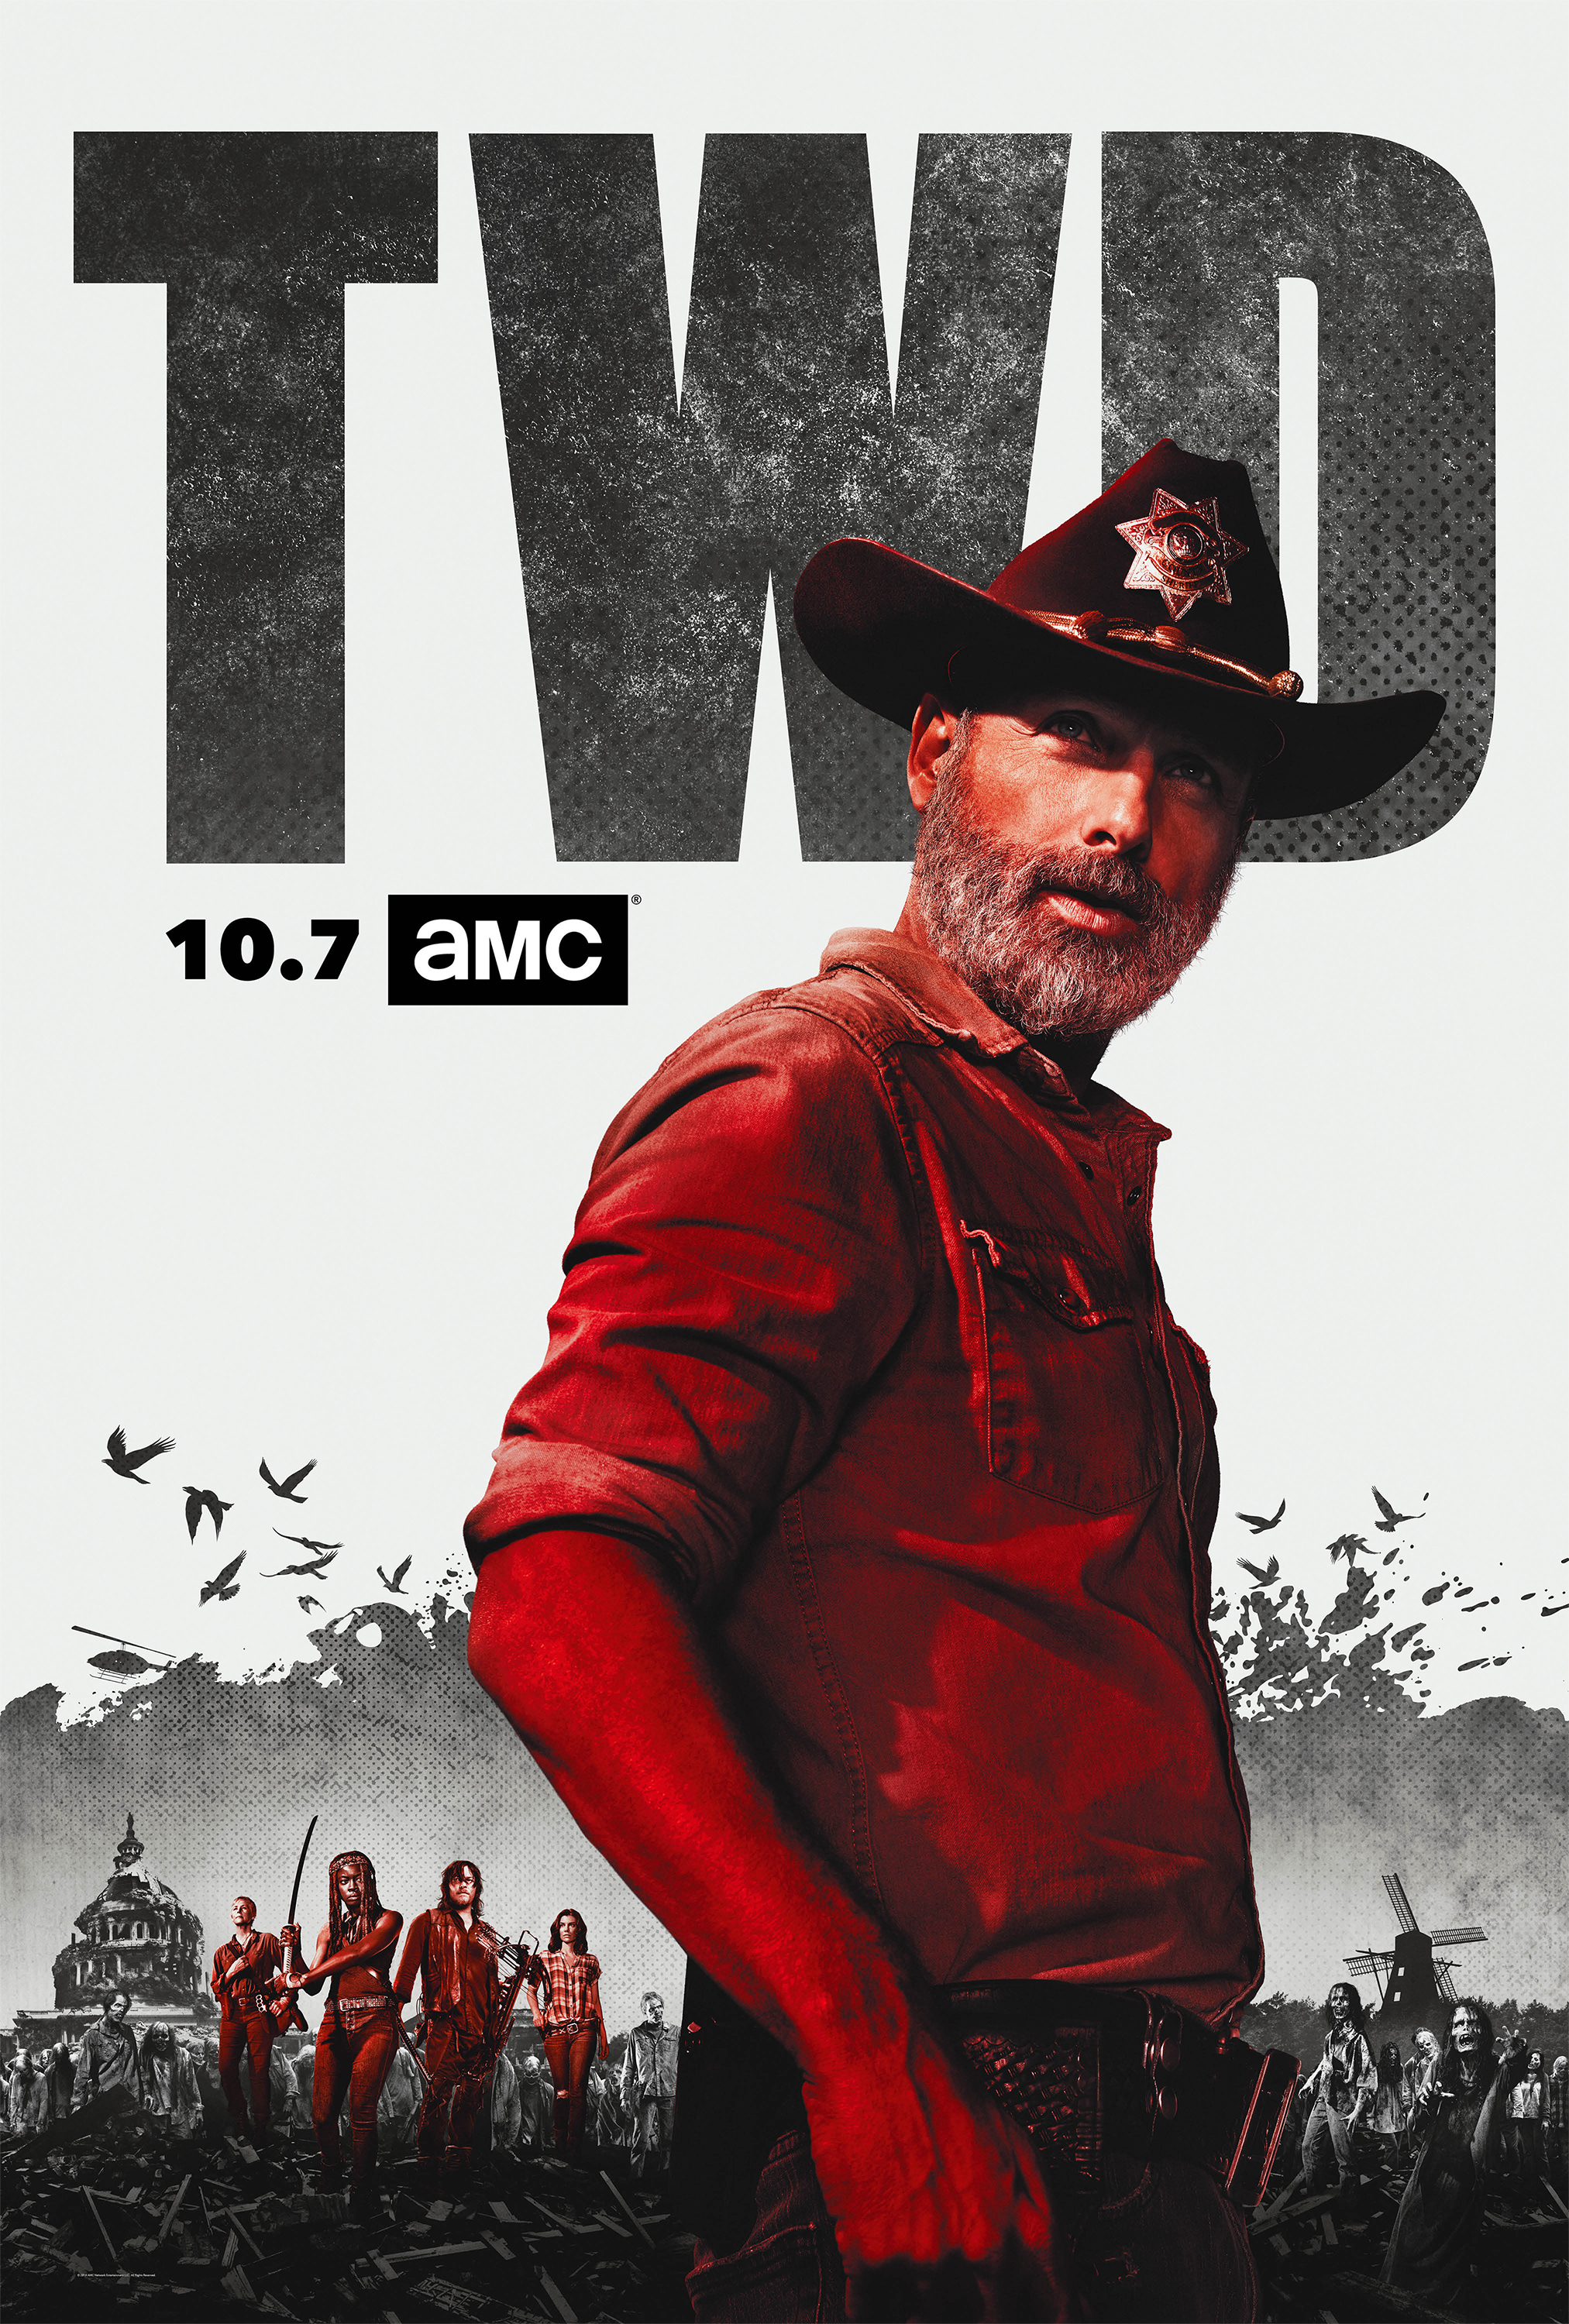 The Walking Dead: Rick Grimes In Memoriam Merchandise Announced for San  Diego Comic-Con